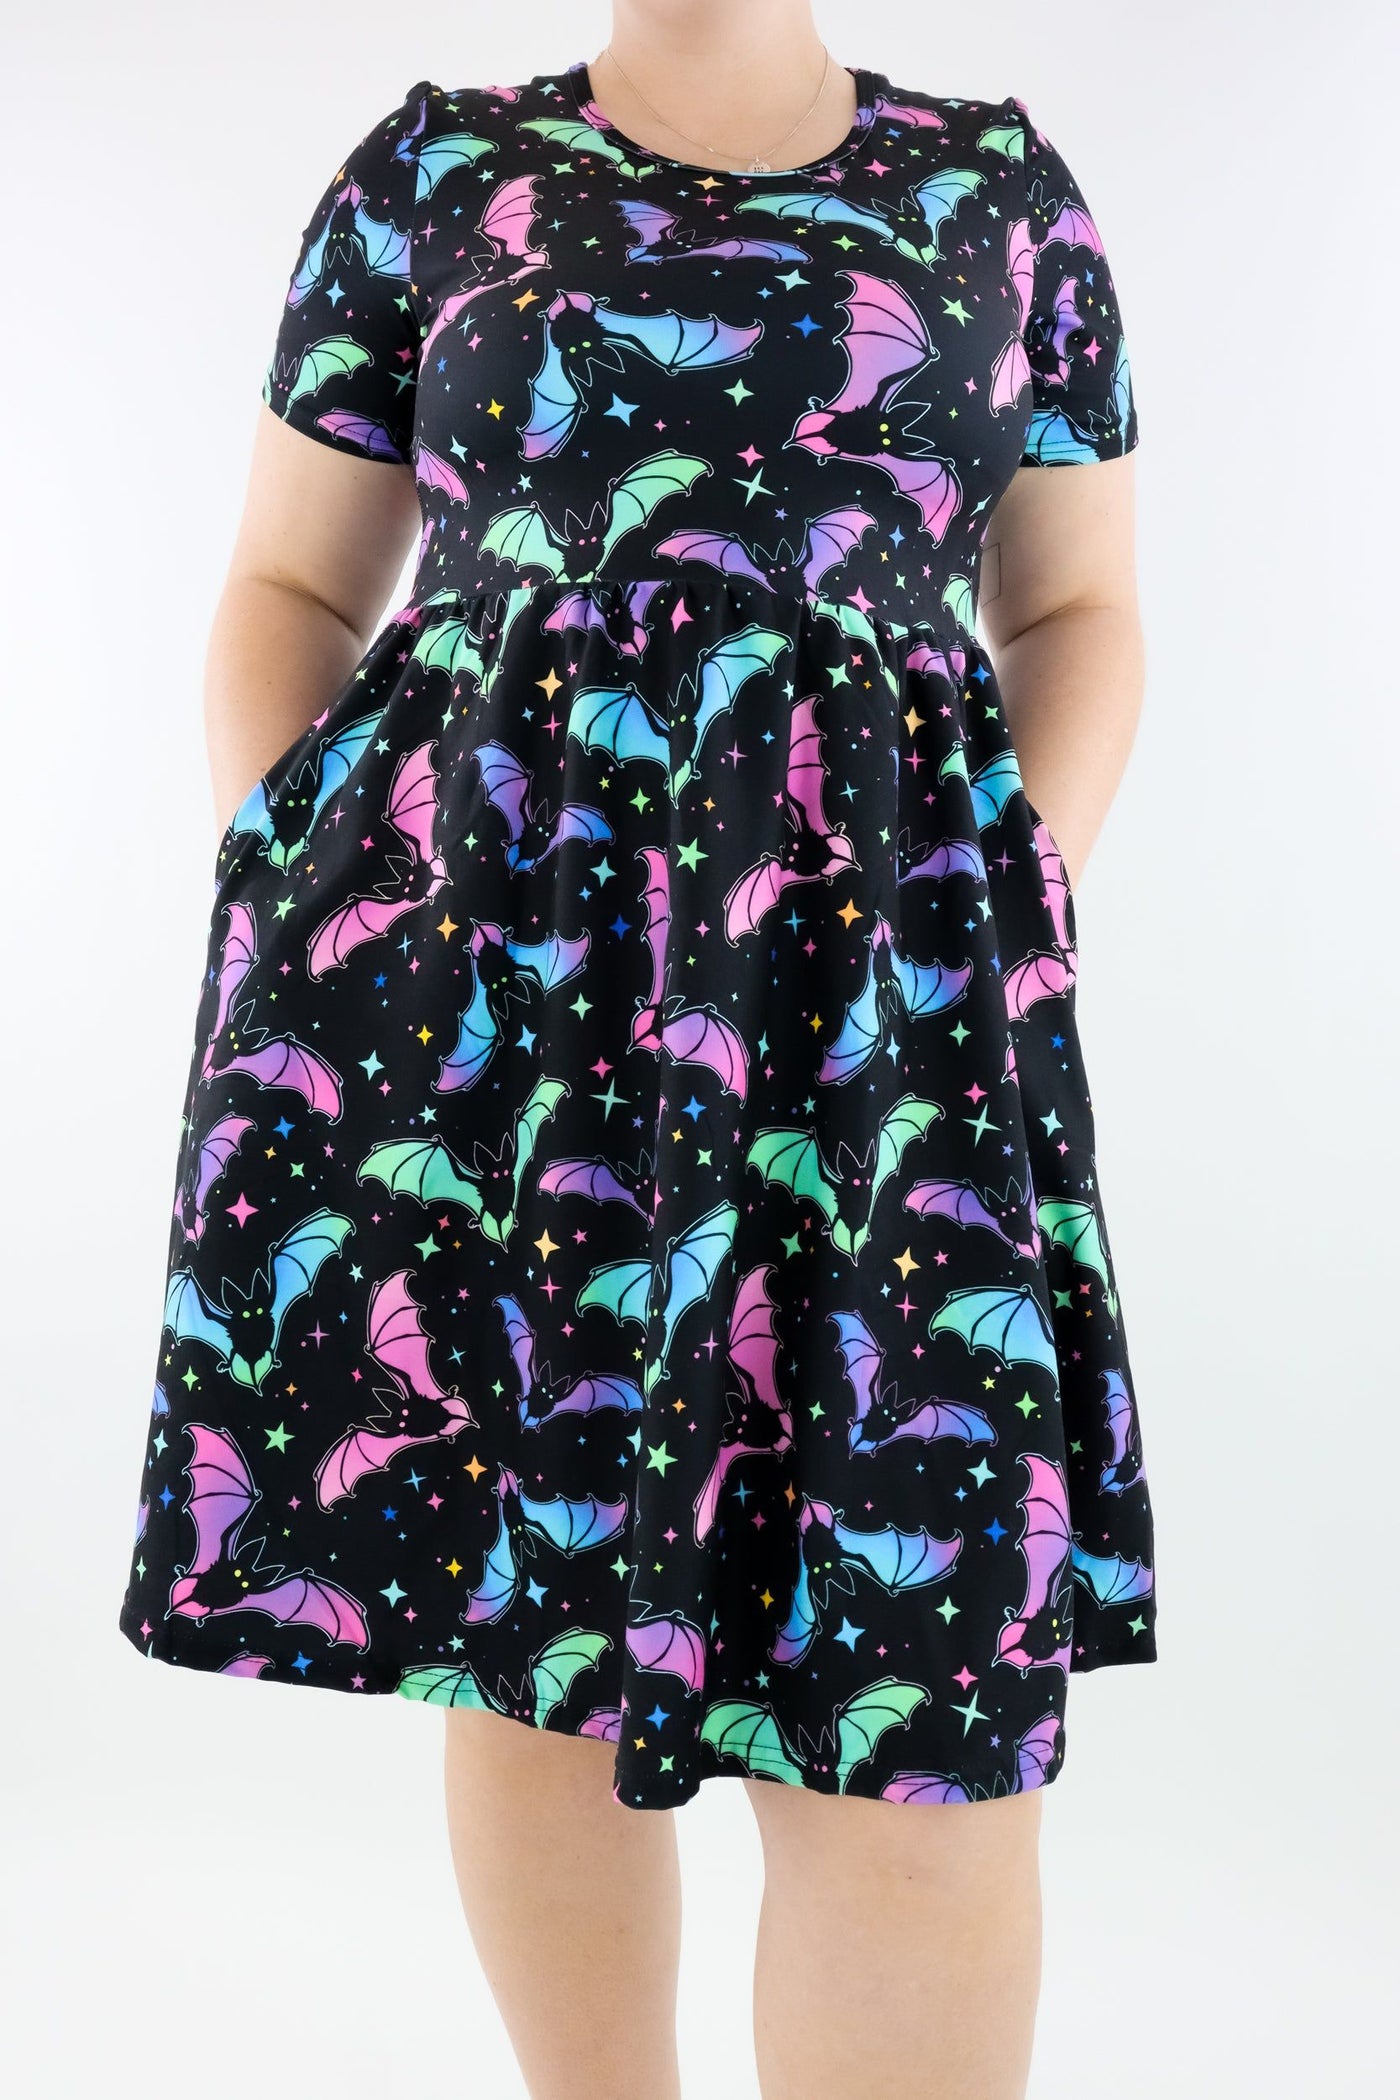 Neon Bats - Short Sleeve Skater Dress - Knee Length - Side Pockets Knee Length Skater Dress Pawlie   